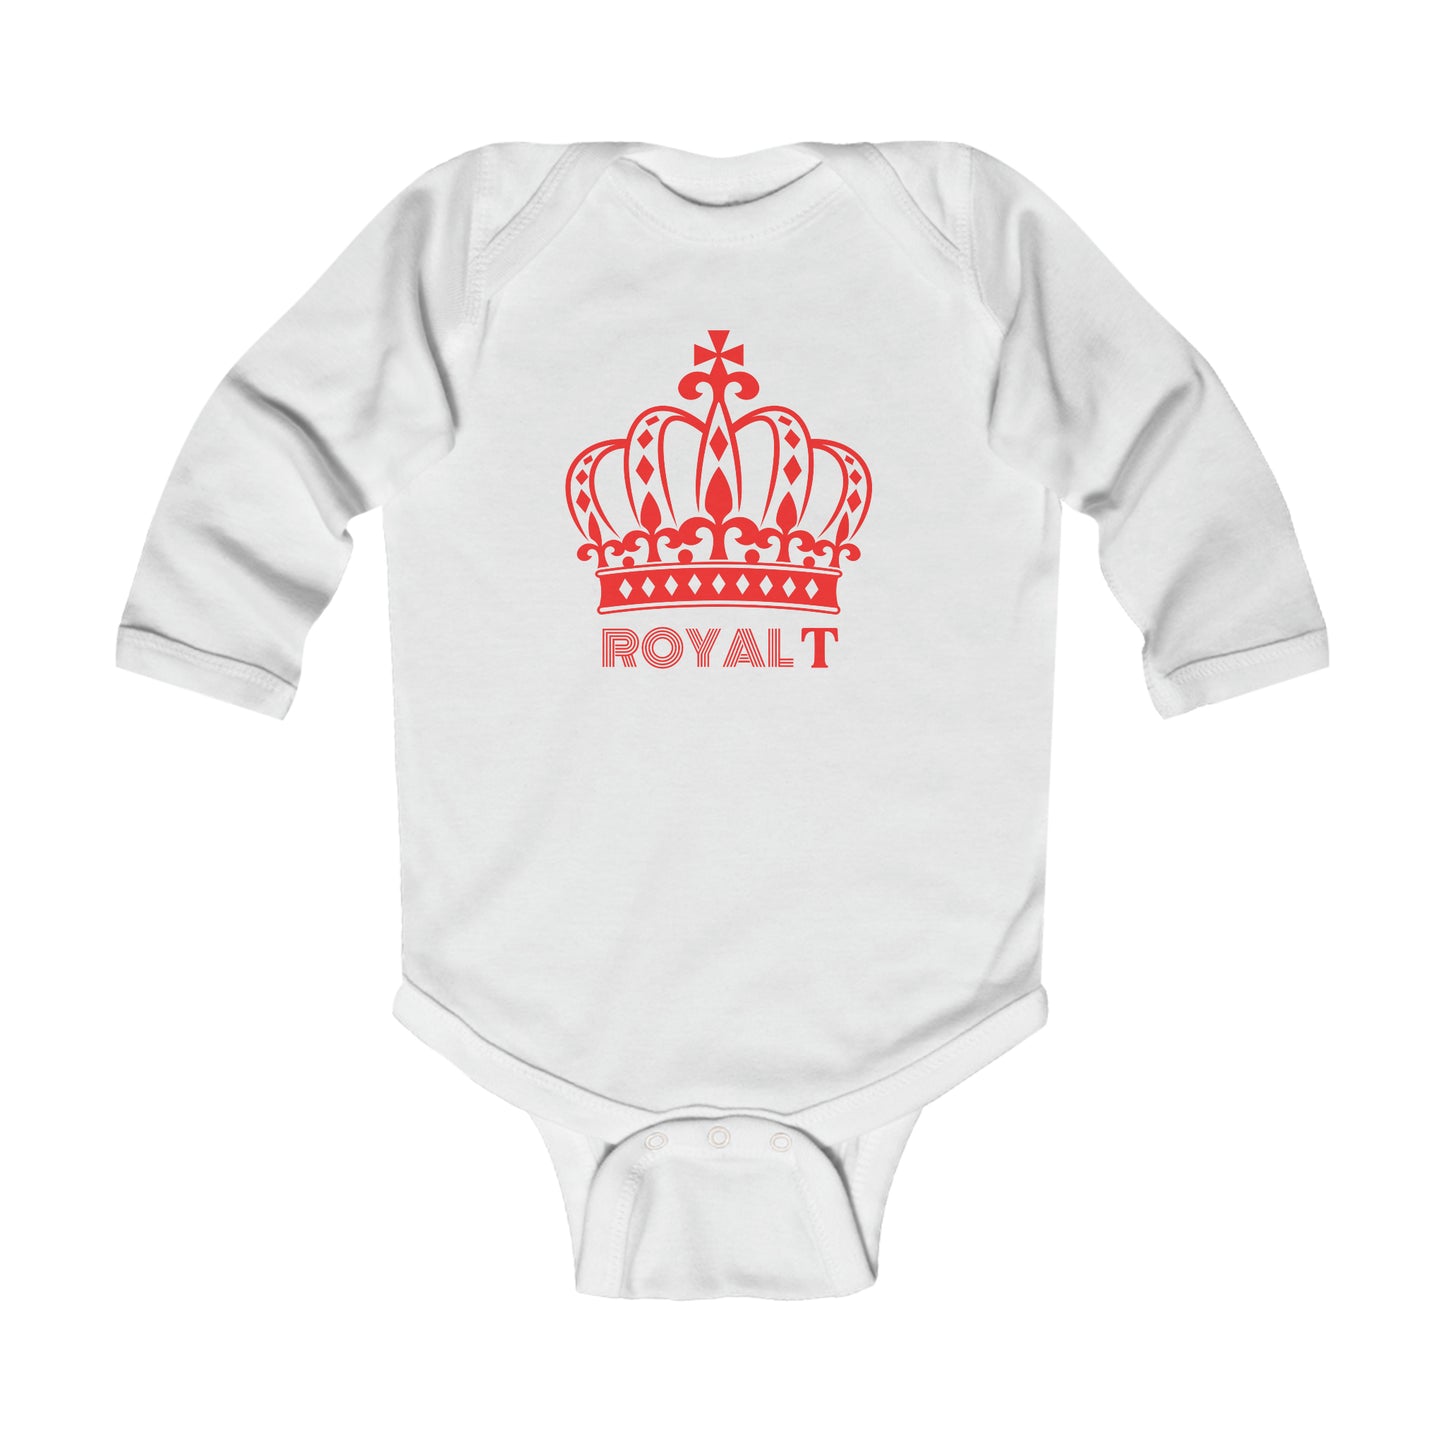 Babies Long Sleeve Bodysuit - Red Royal T